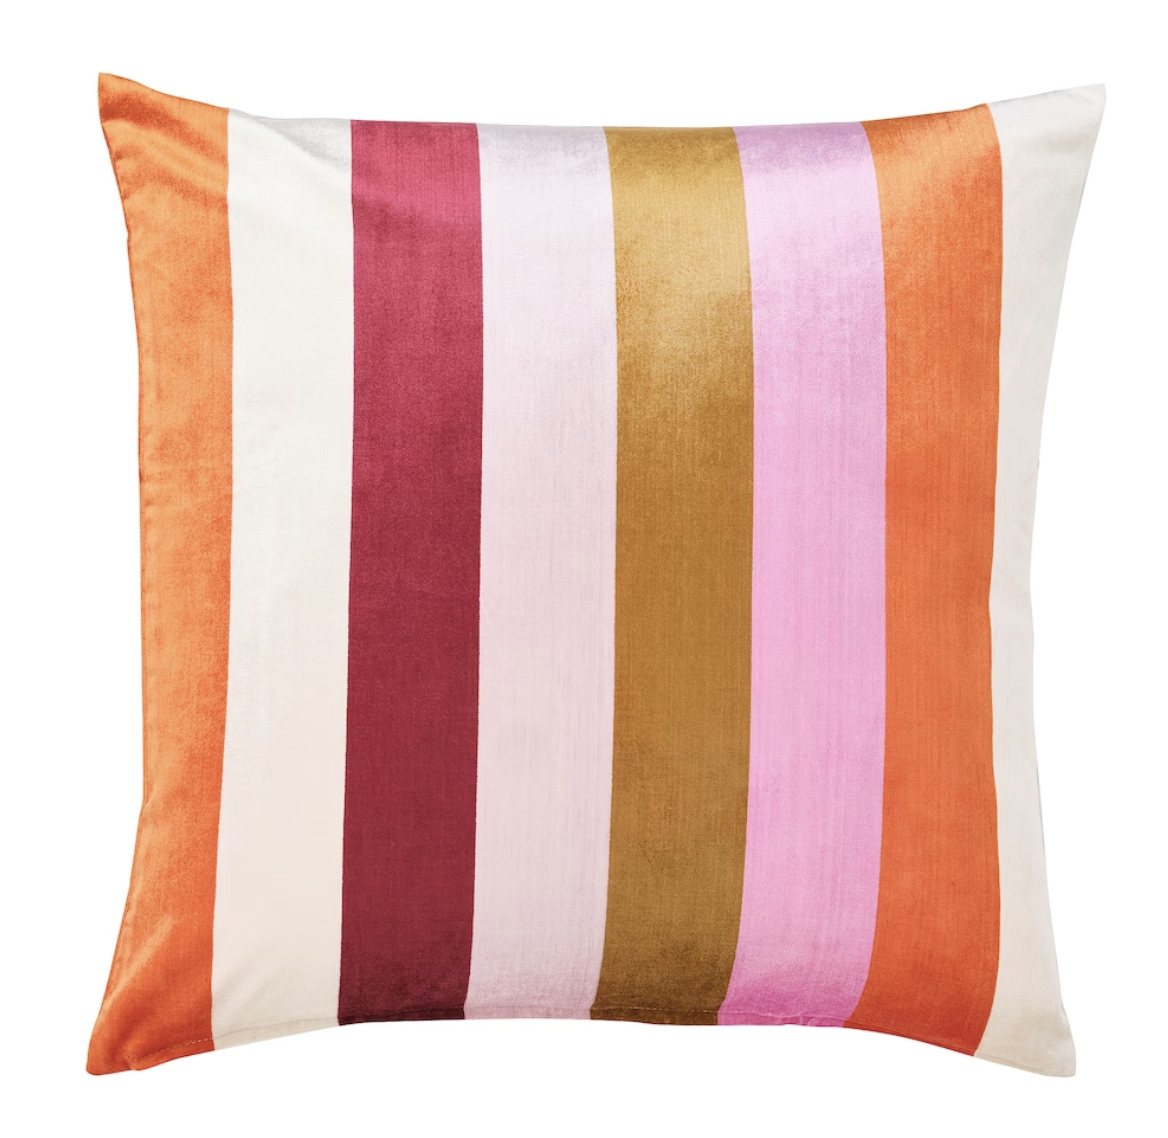 Ikea Vattenvan Cushion Cover 50x50cm, Red-Pink-Orange (8581231116575)